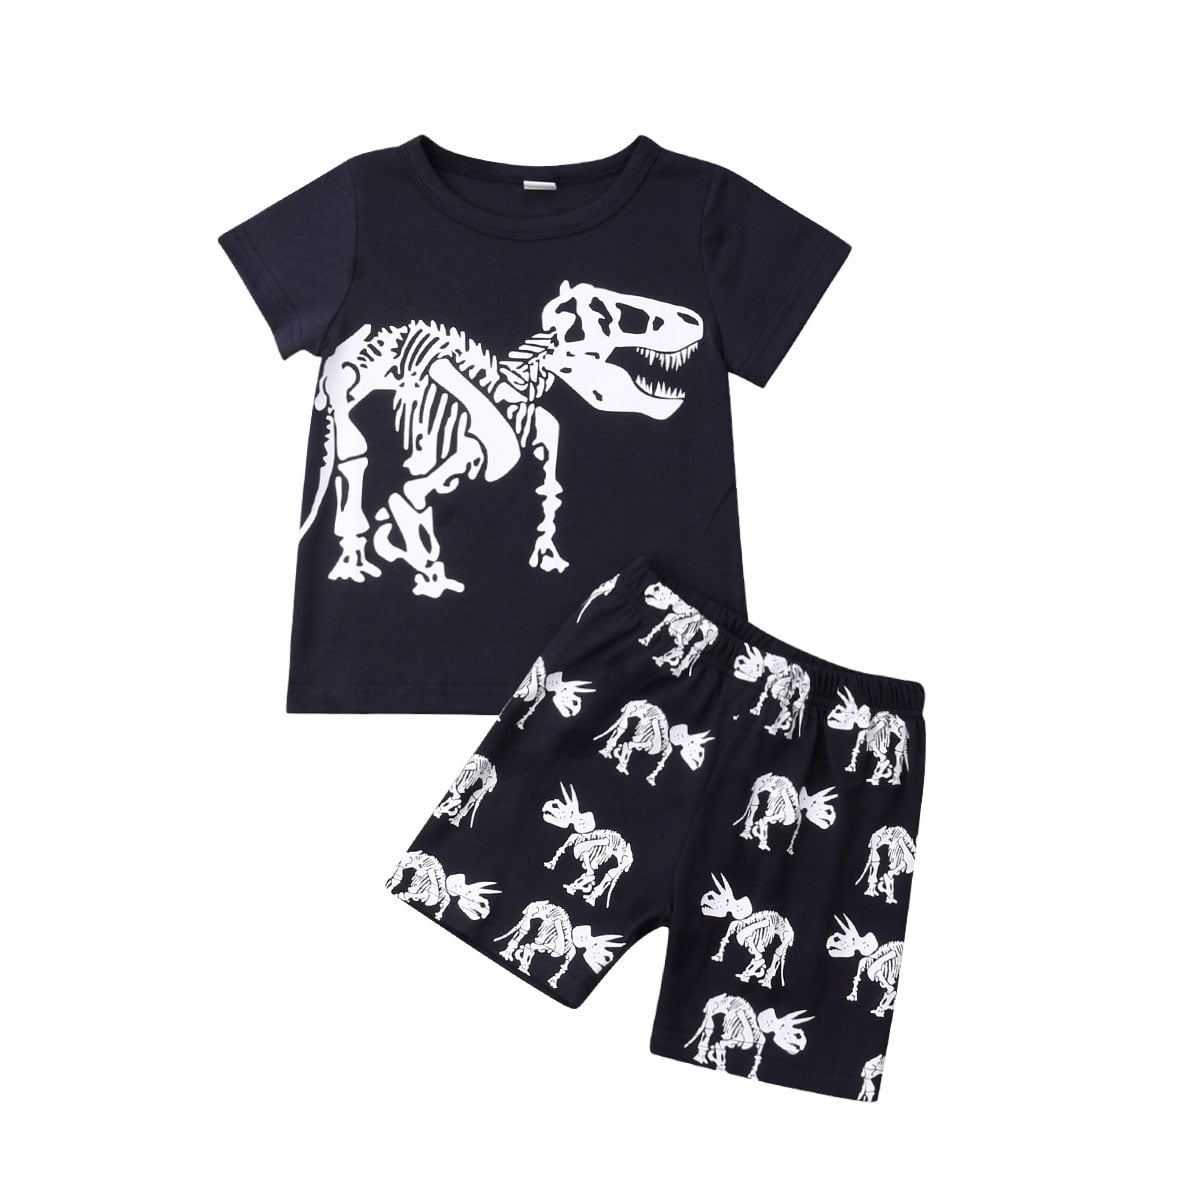 Toddler Baby Boys Cartoon Letter Dinosaur Print T Shirt Tops Shorts Outfit Set D 